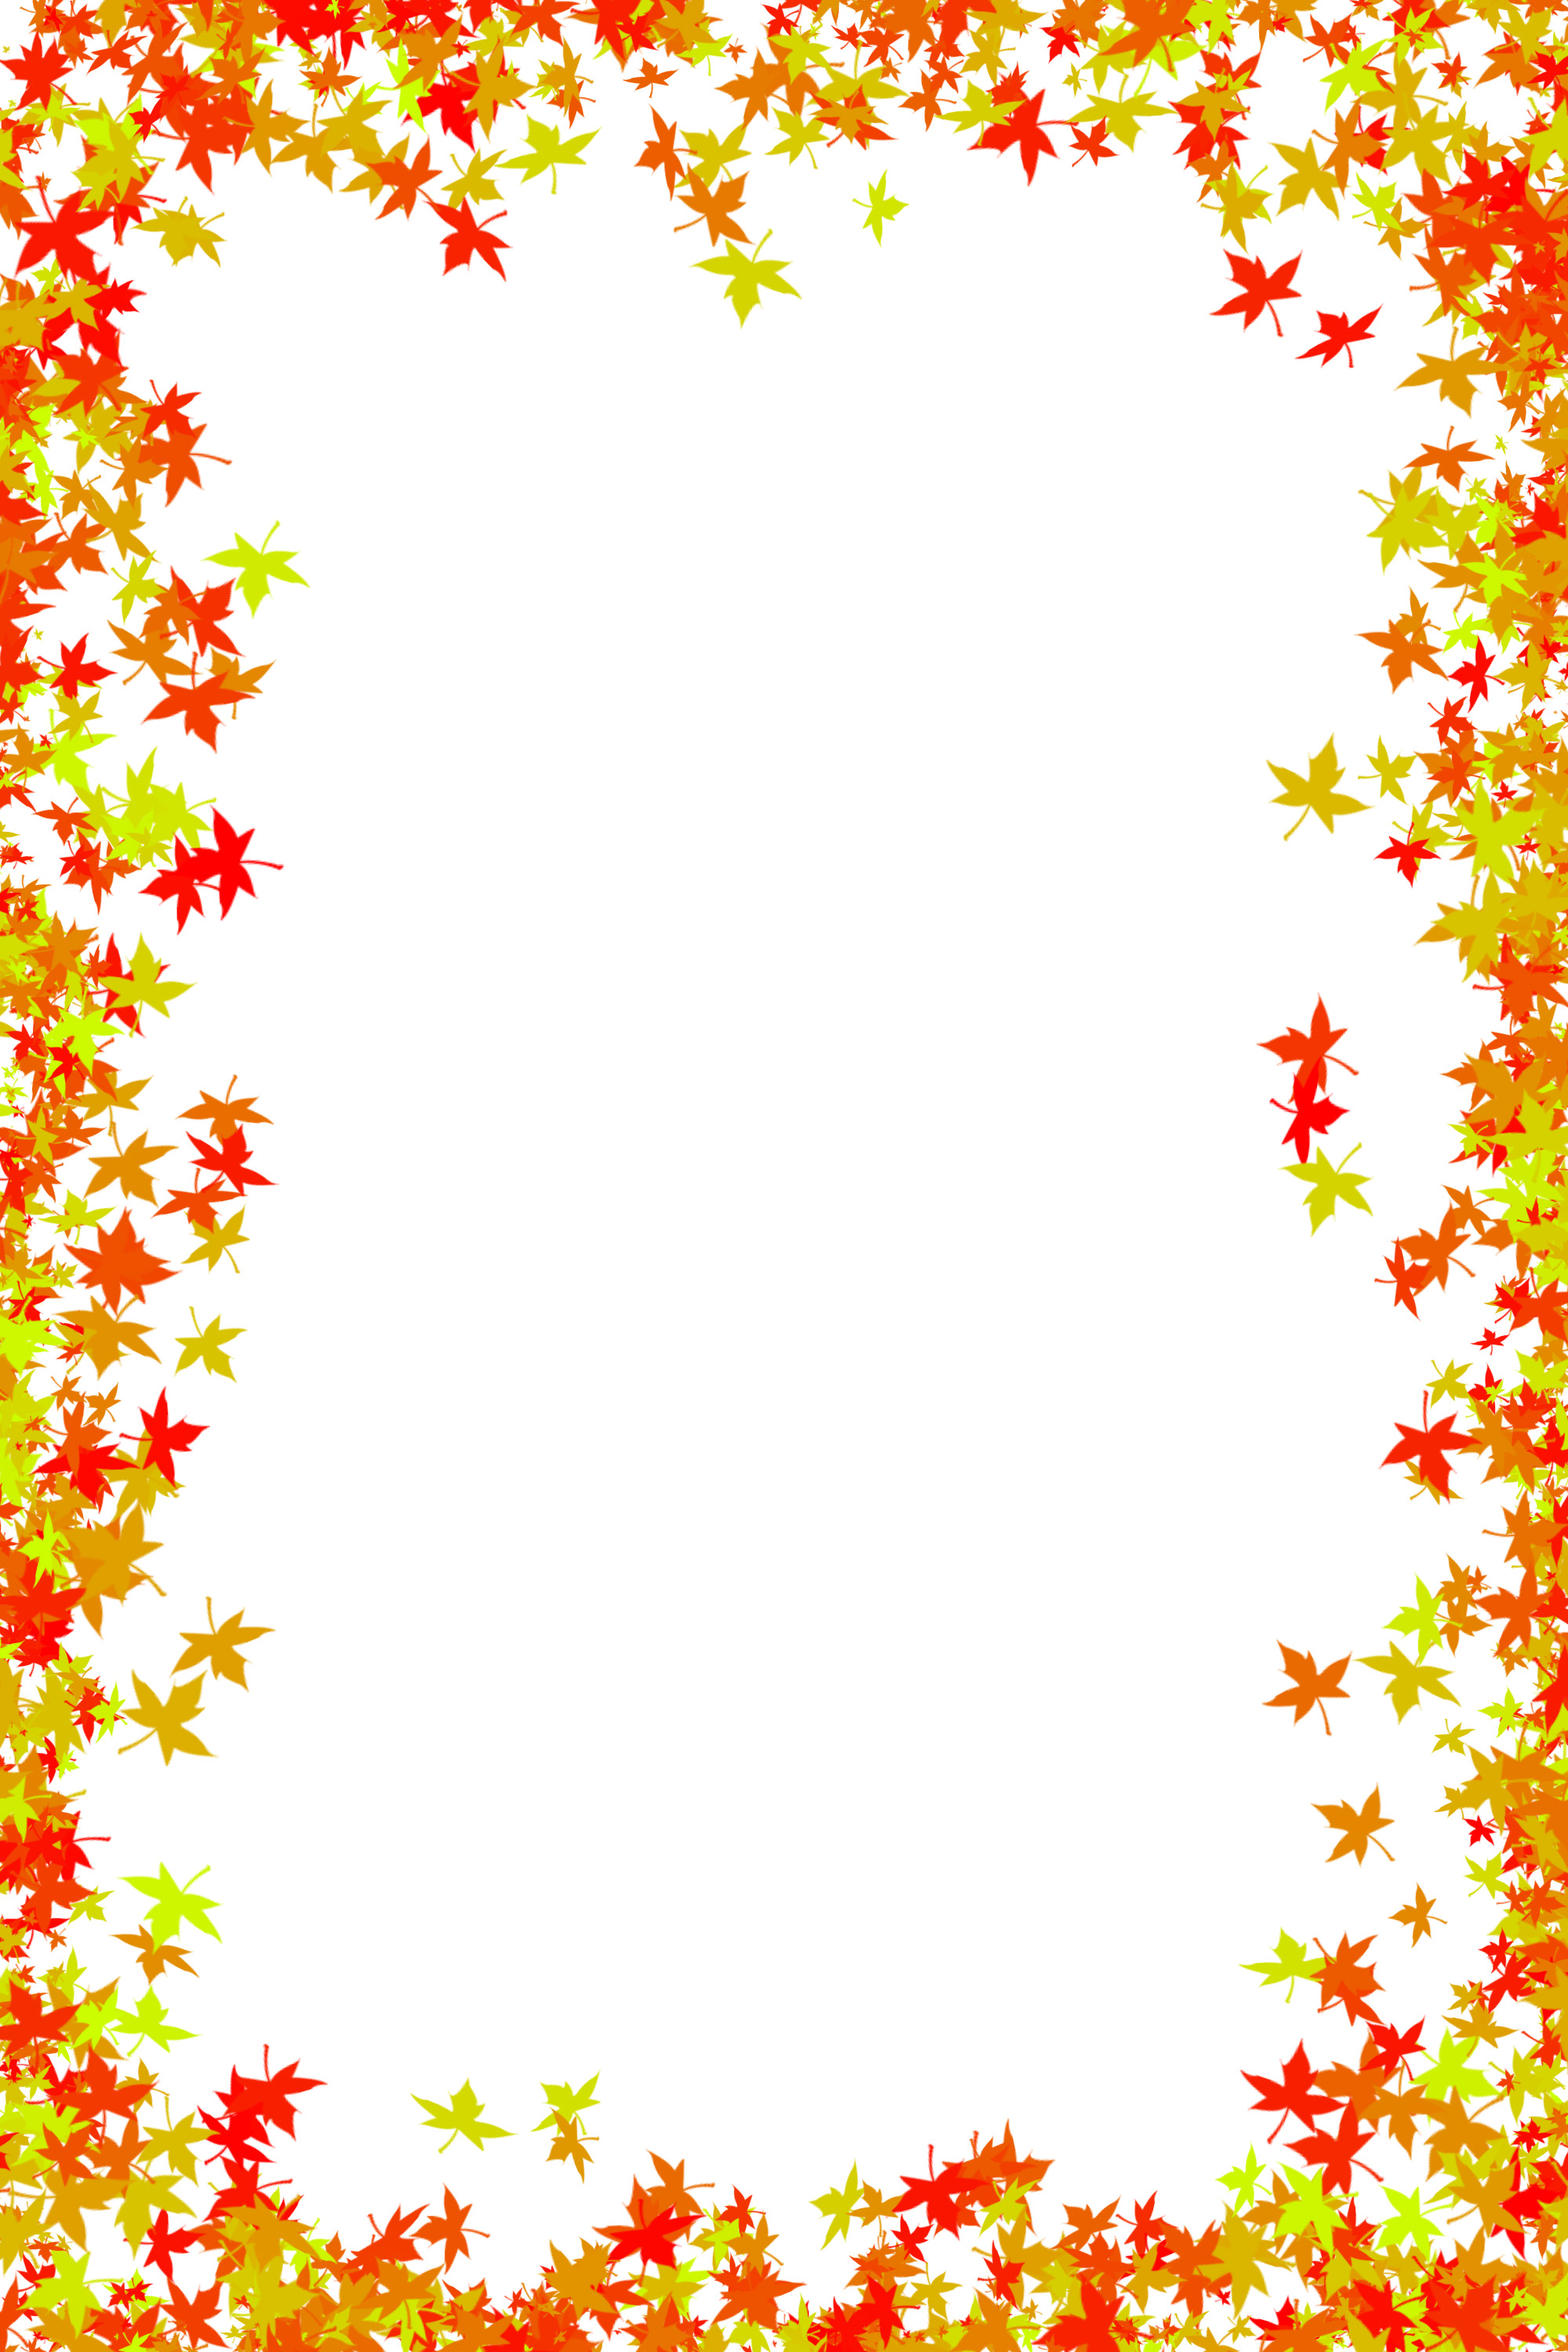 Autumn leaves clip art border